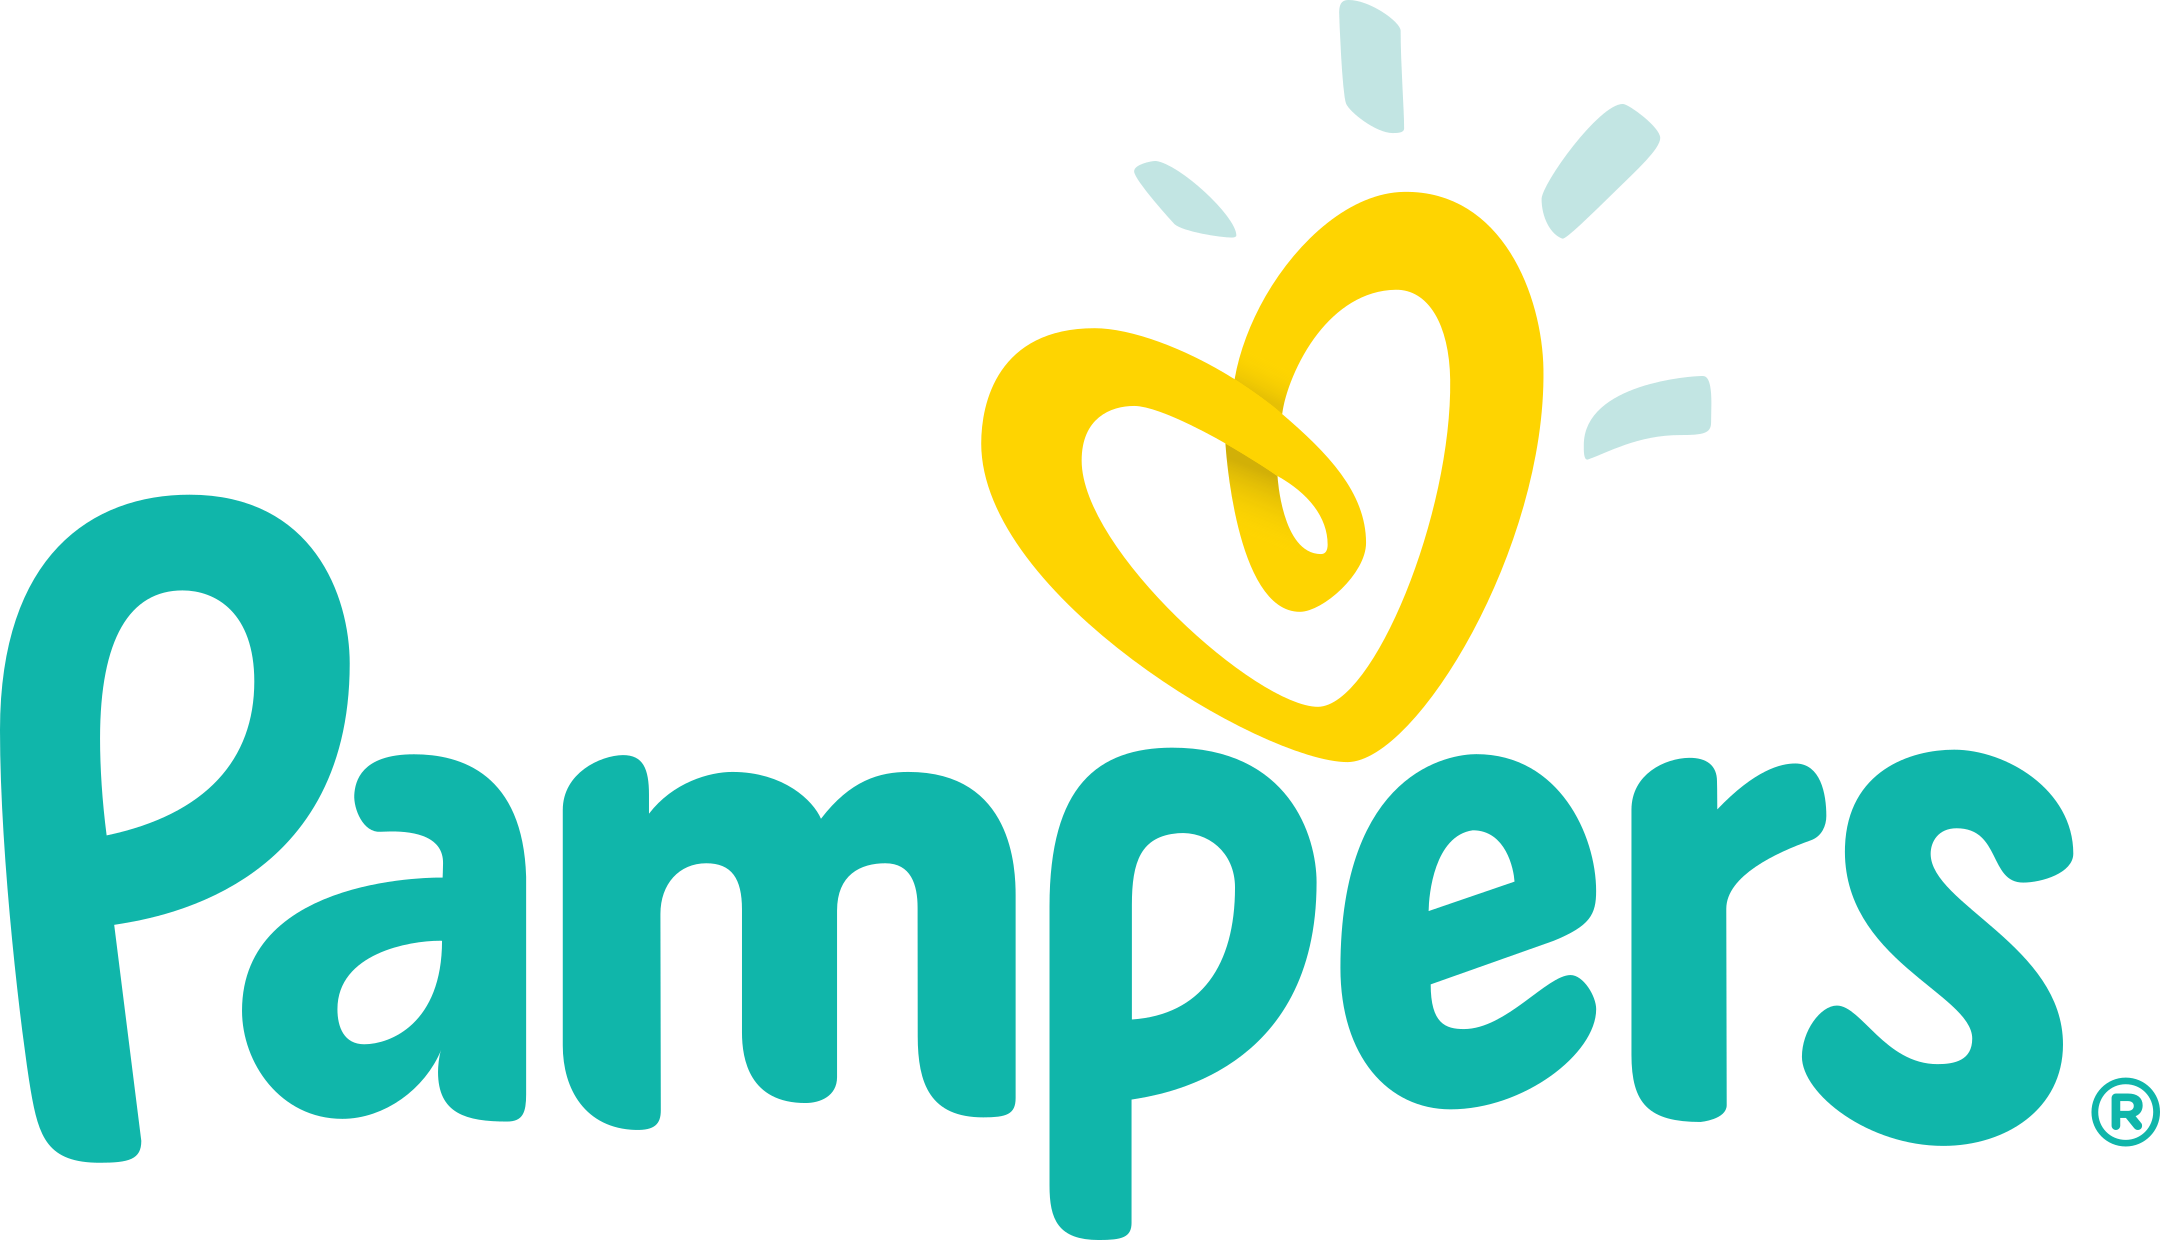 pampers logo 1 1 - Pampers Logo